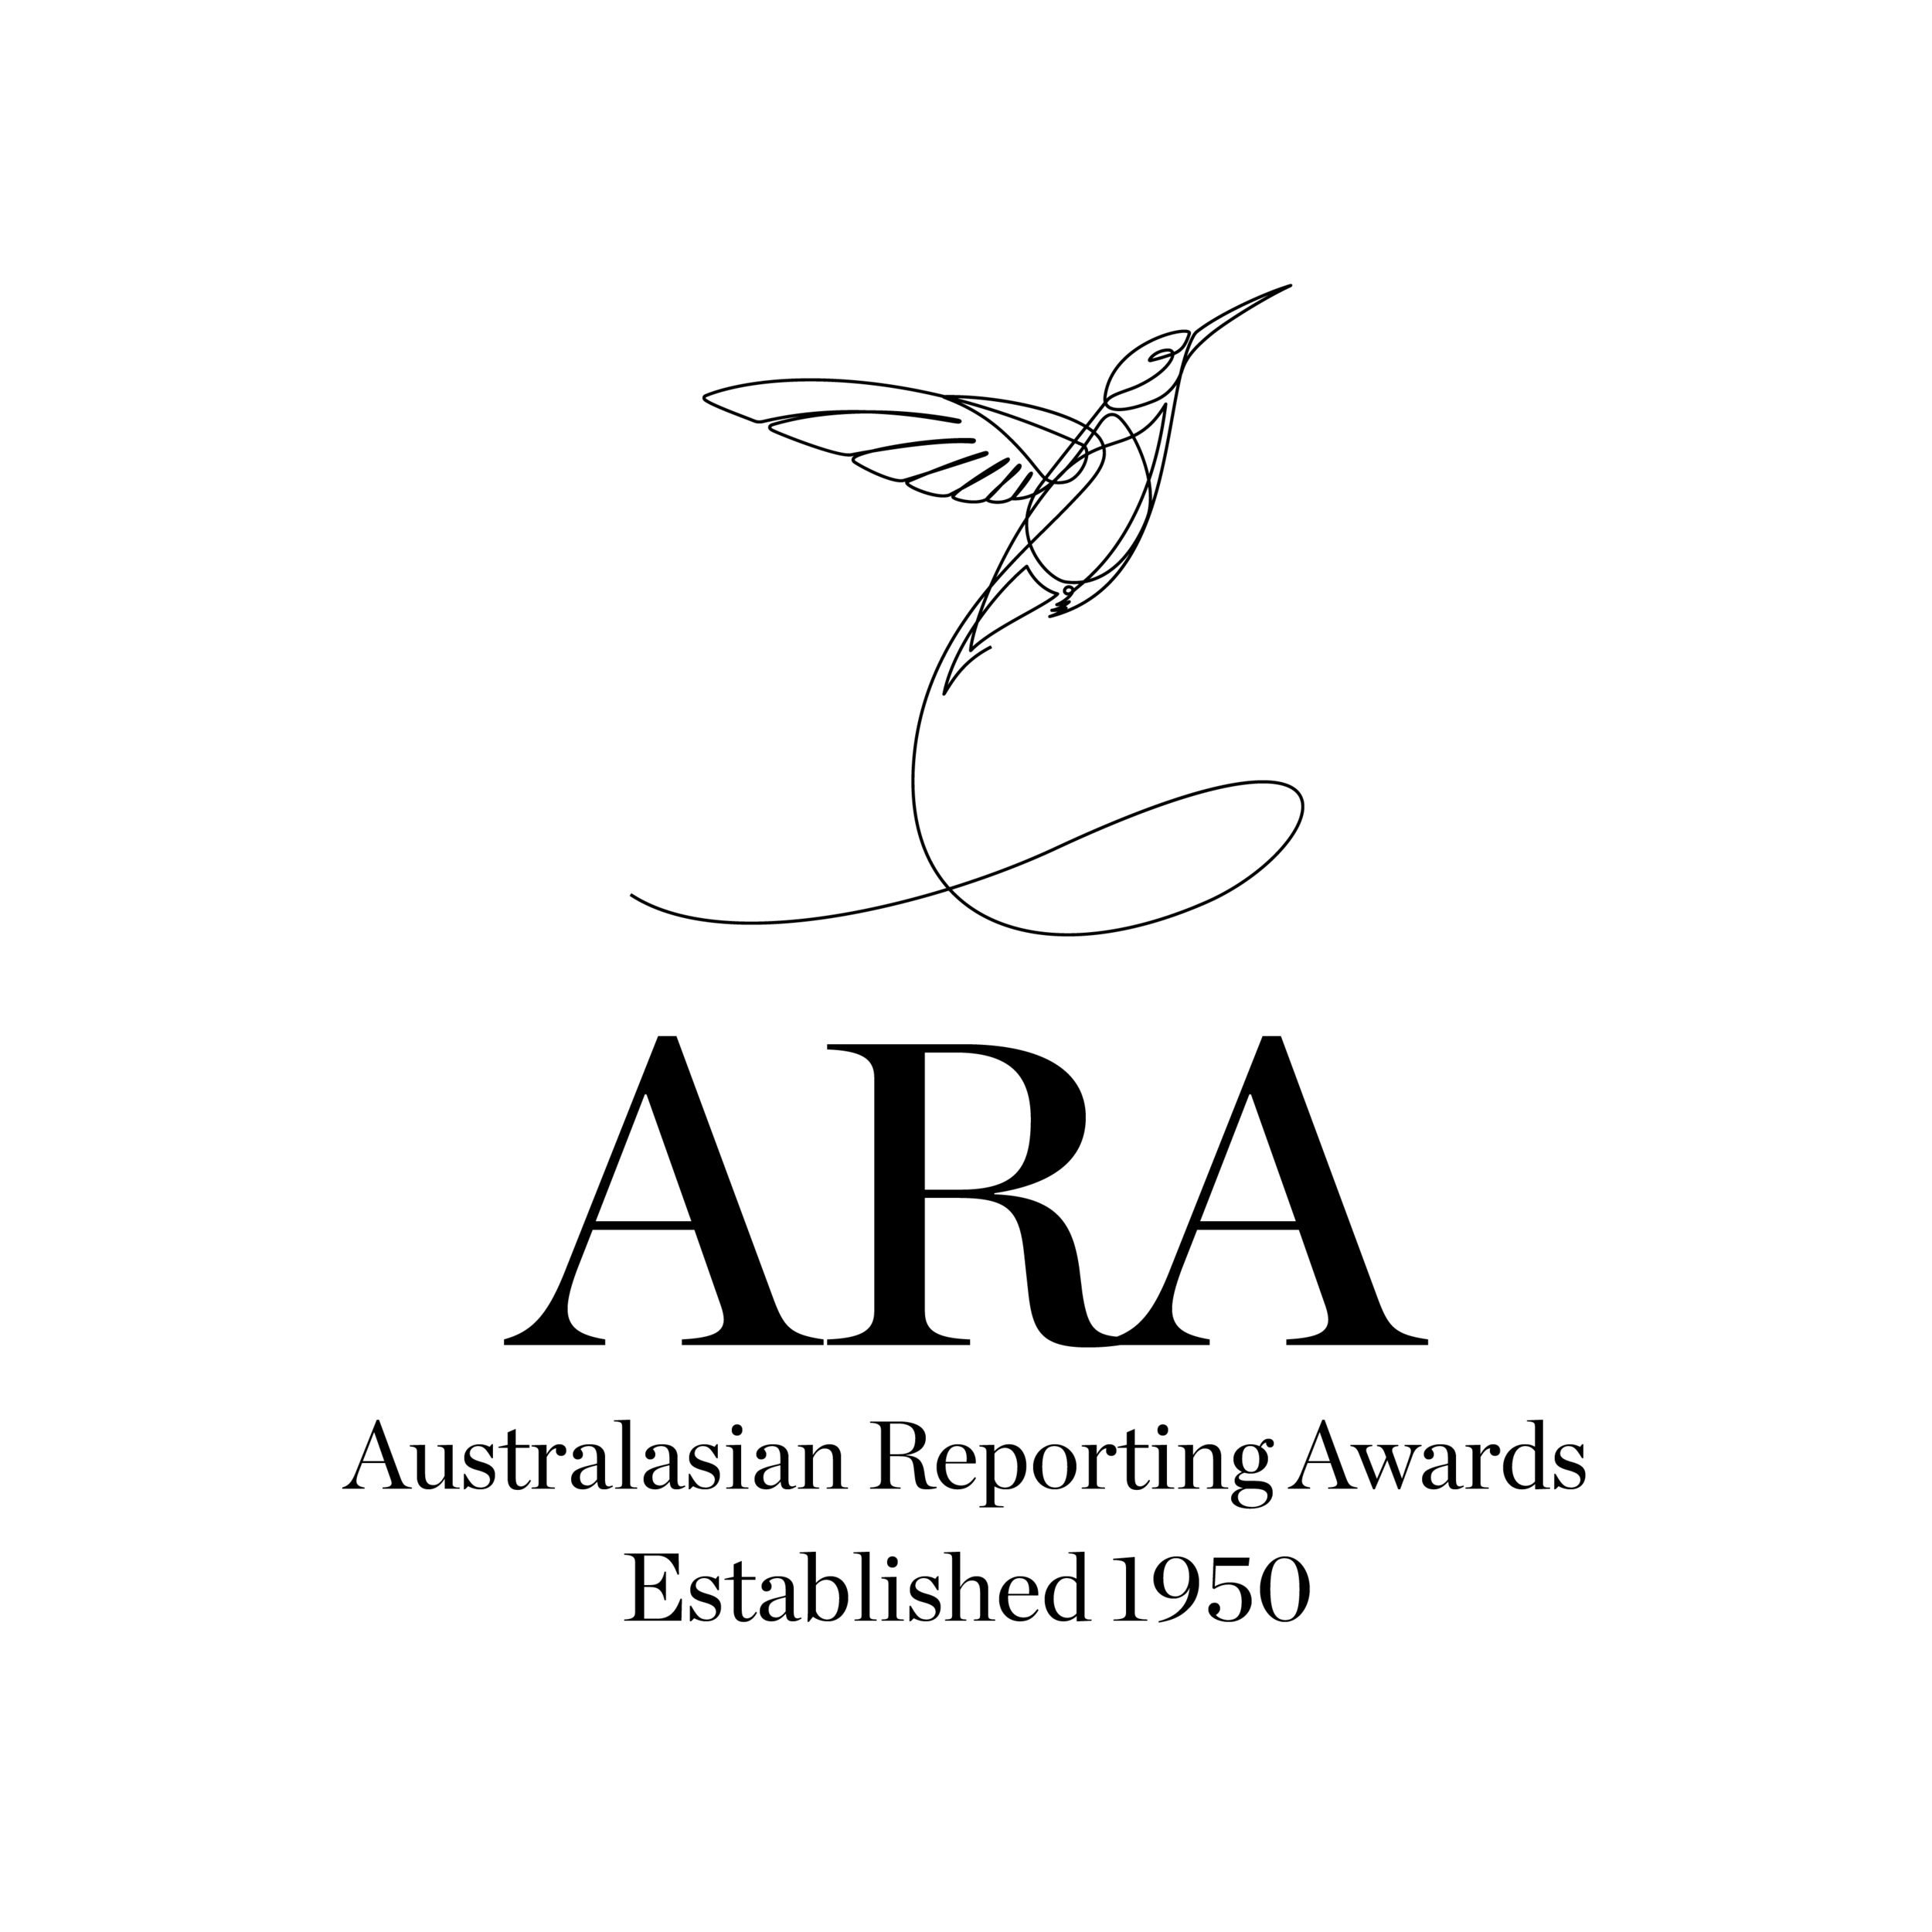 Australasian Reporting Awards logo